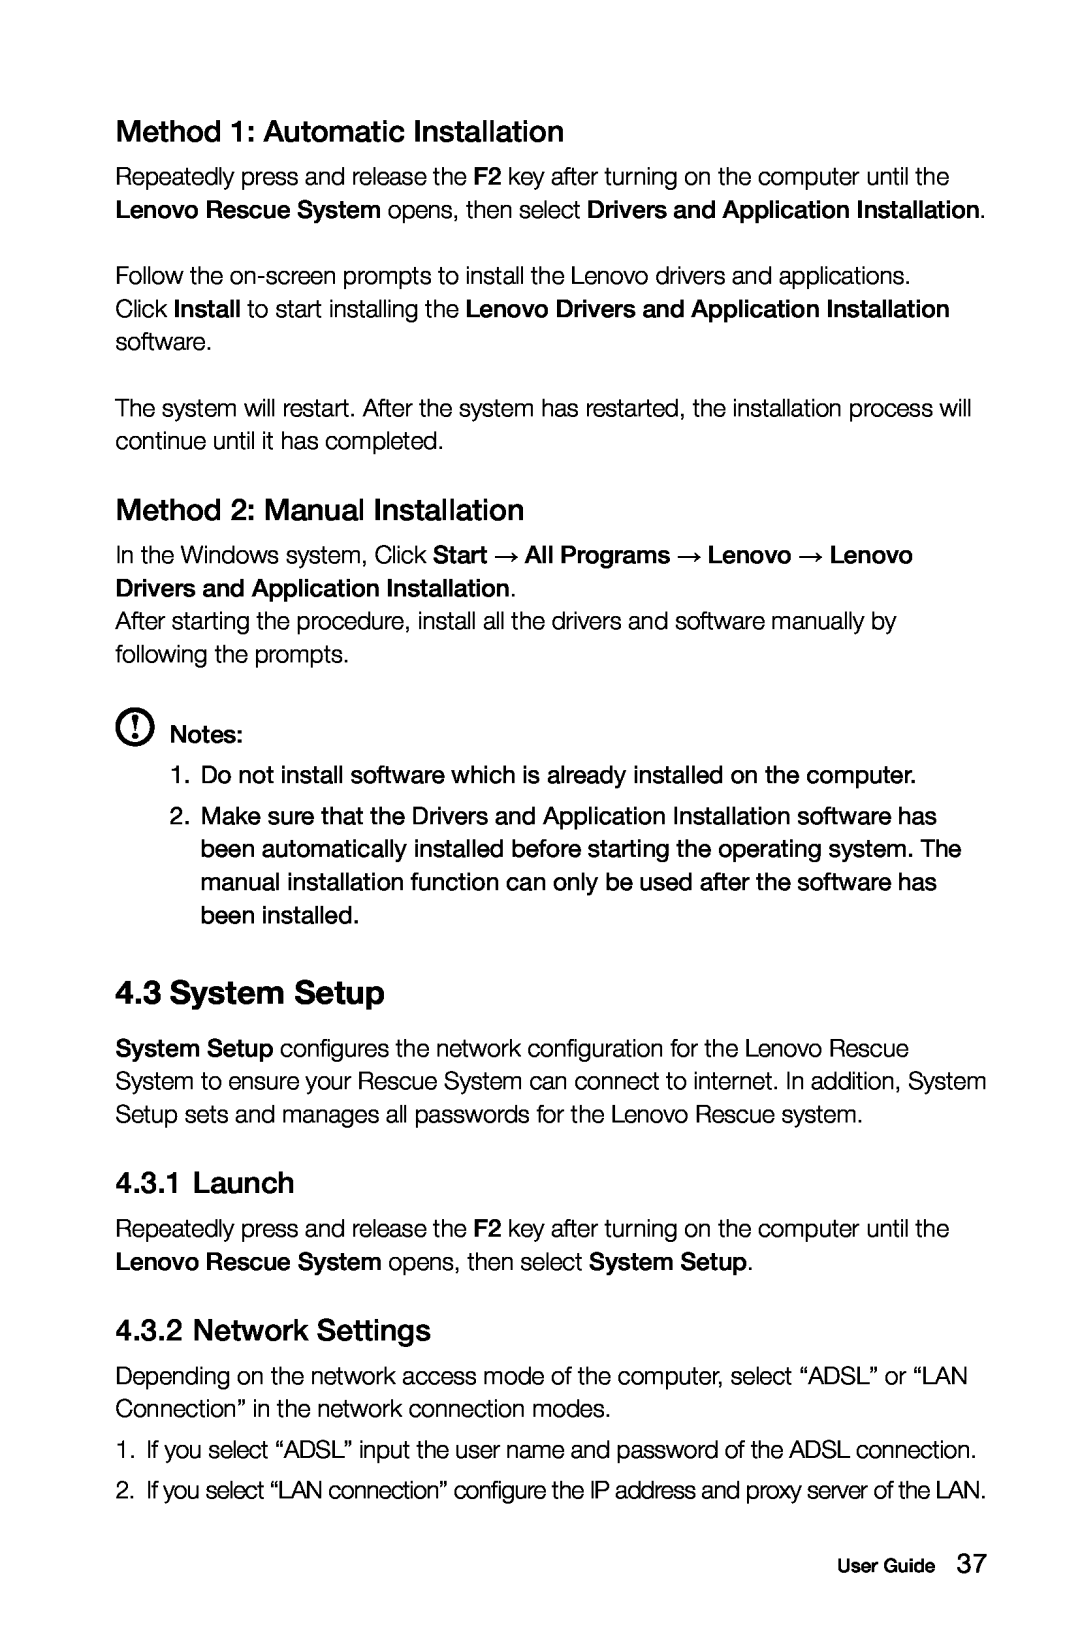 Lenovo 97 manual System Setup, Method 1 Automatic Installation, Method 2 Manual Installation, Launch, Network Settings 